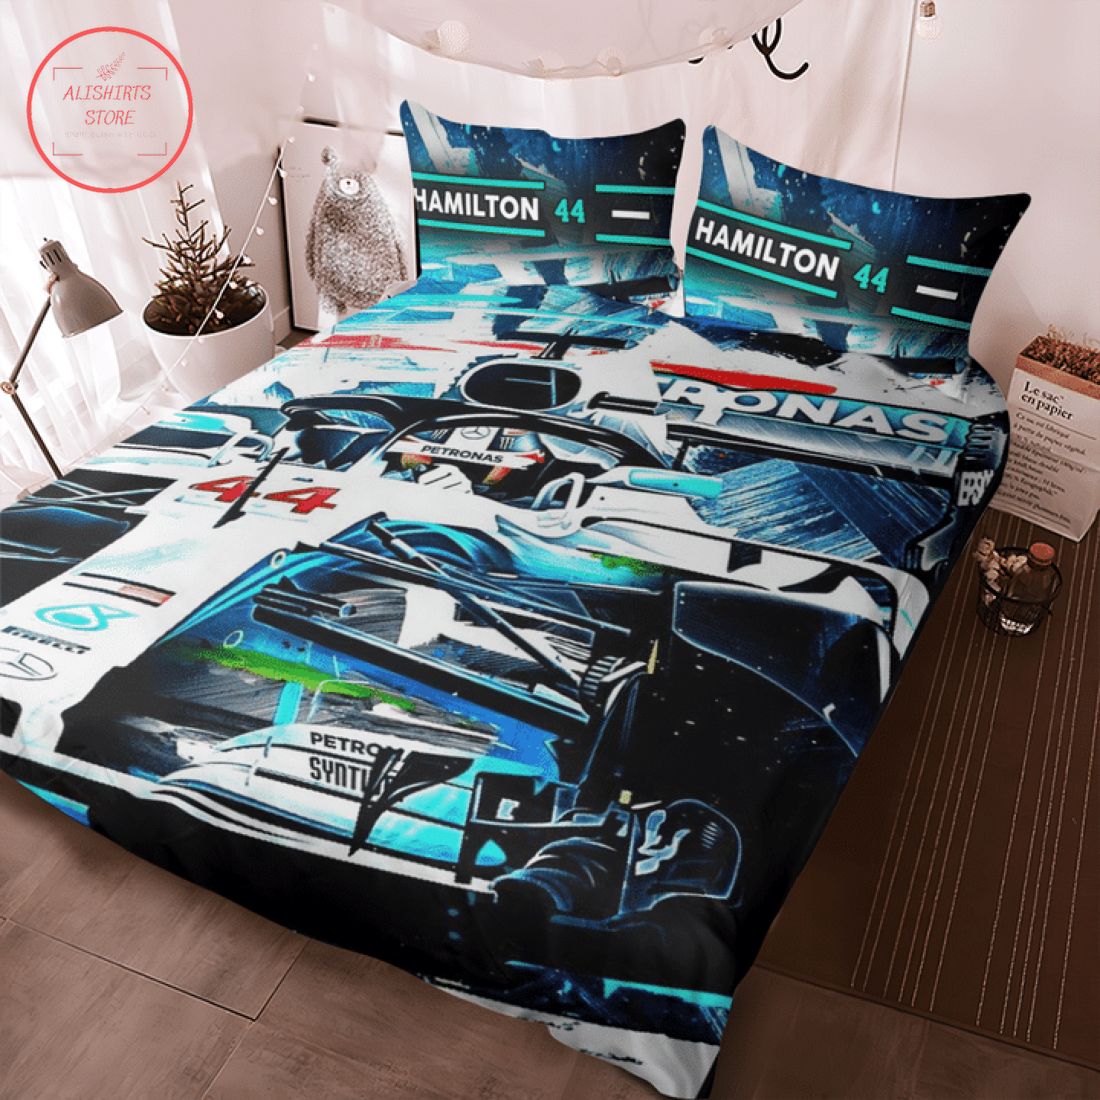 Lewis Hamilton 44 Racing Car Bedding Set